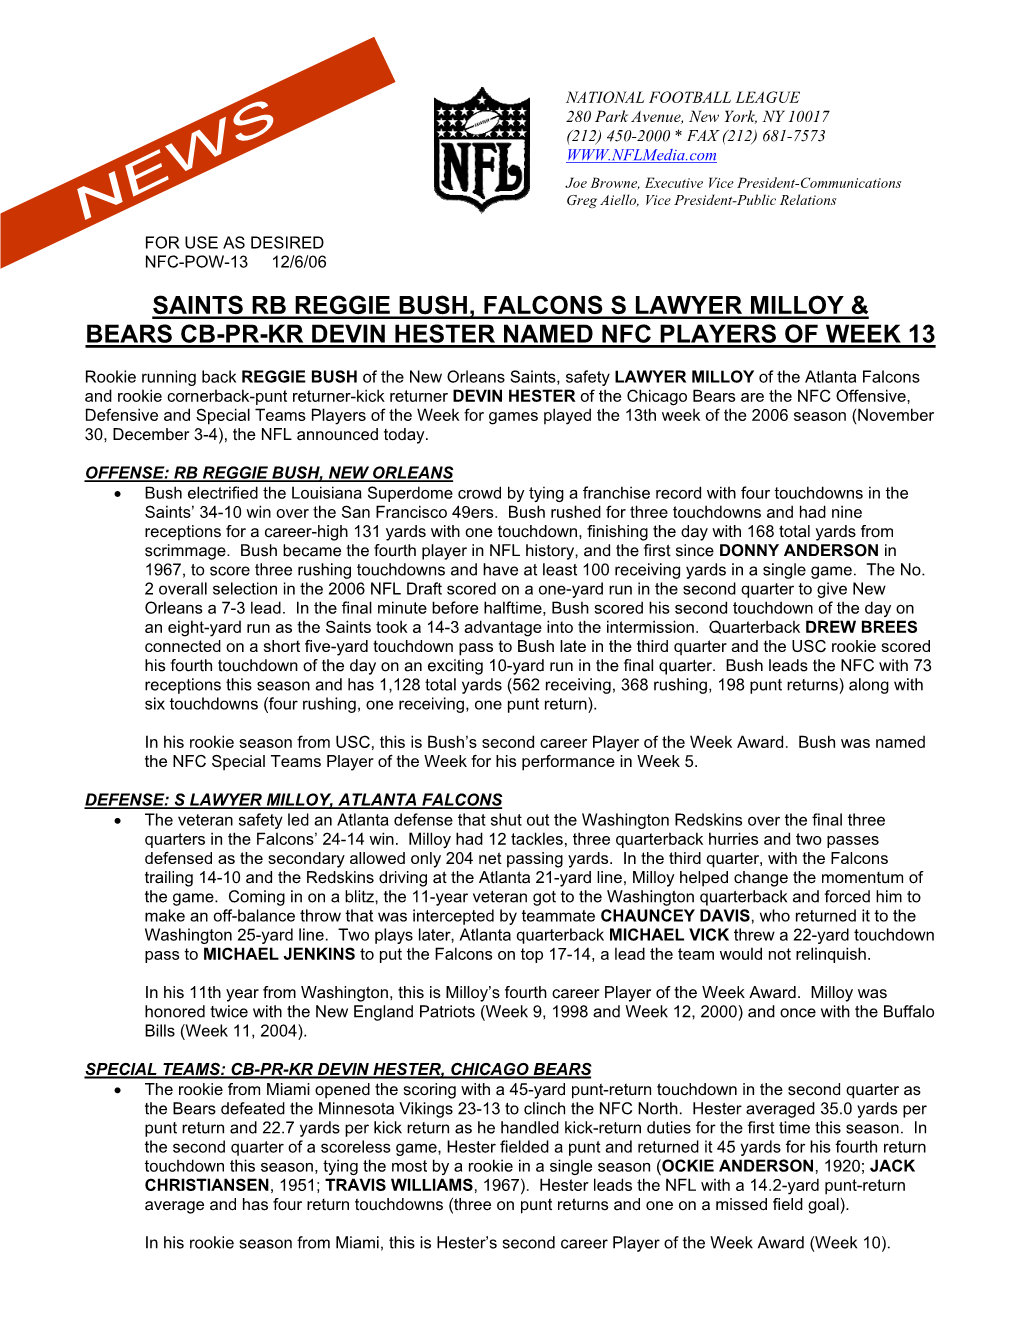 Saints Rb Reggie Bush, Falcons S Lawyer Milloy & Bears Cb-Pr-Kr Devin Hester Named Nfc Players of Week 13